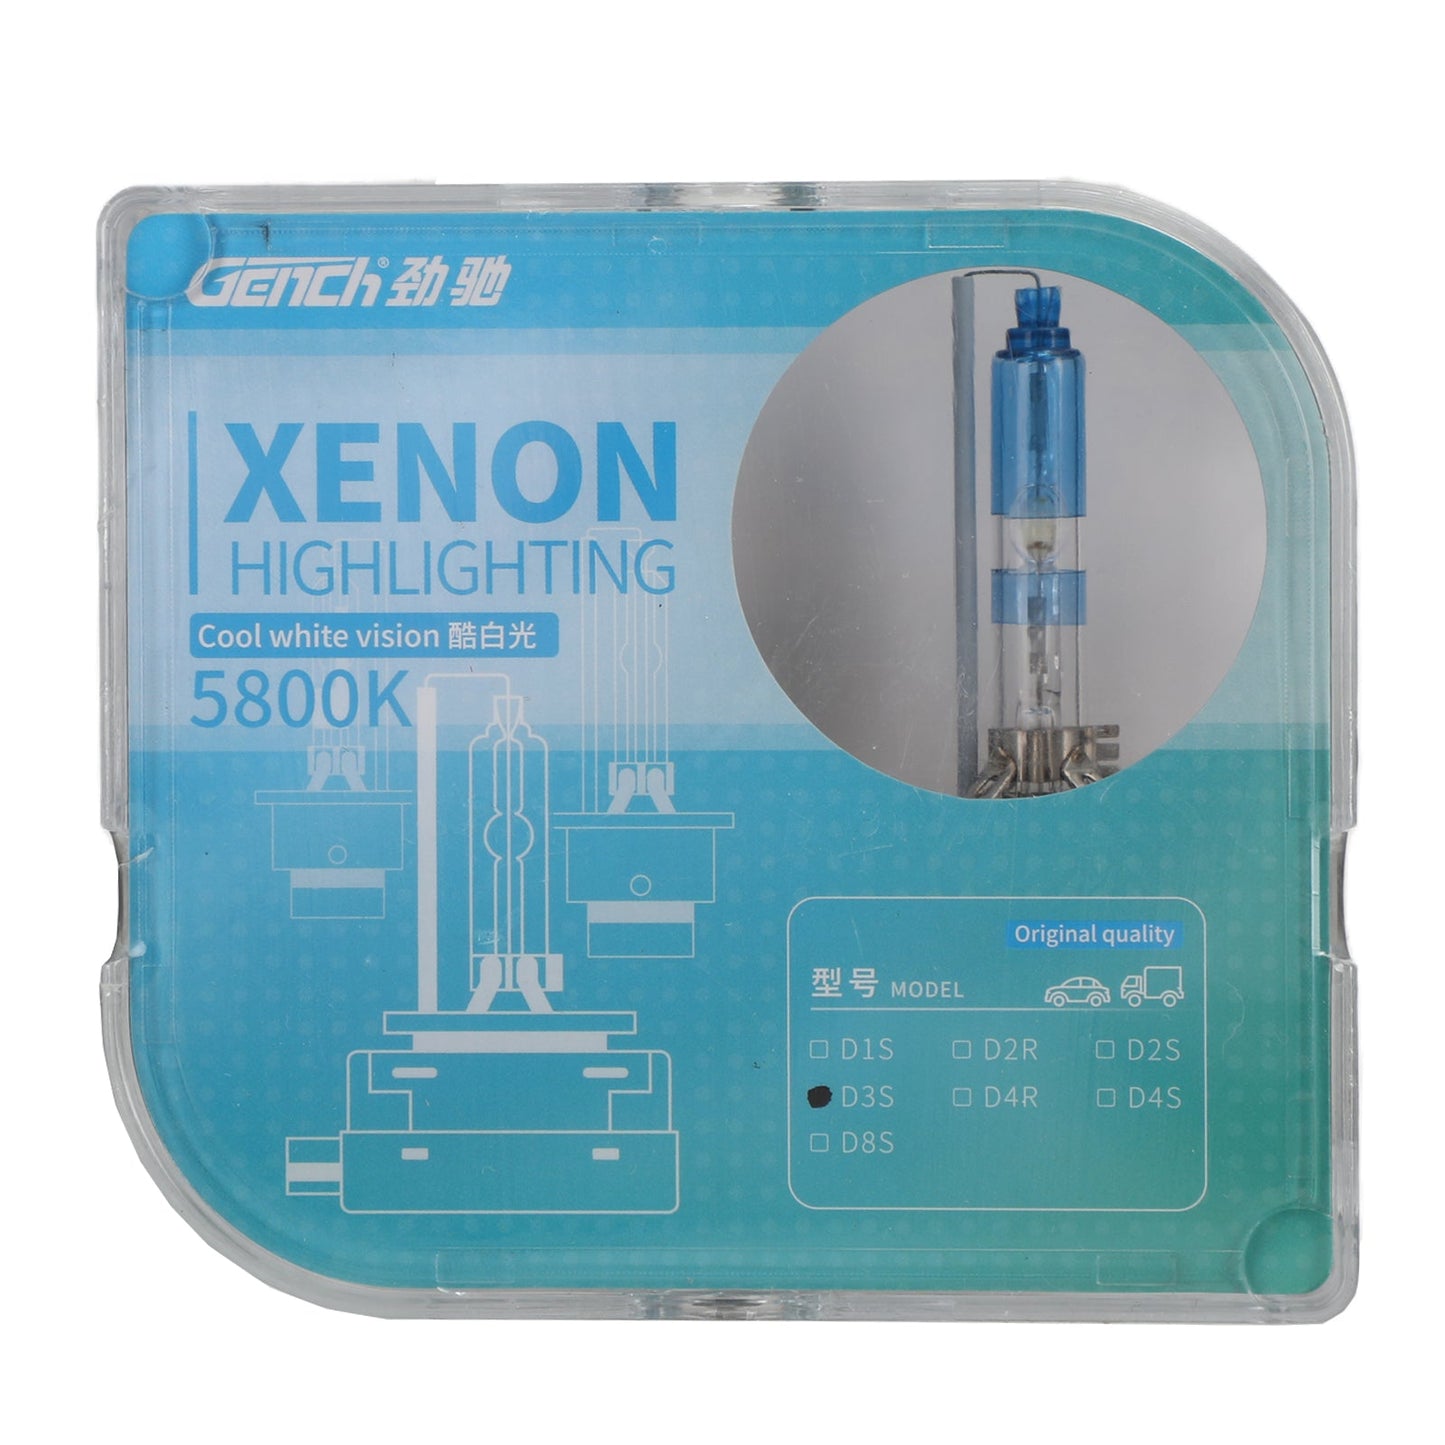 For Gench Xenon Highlighting Headlight Cool White Vision D1SCWV 5800K